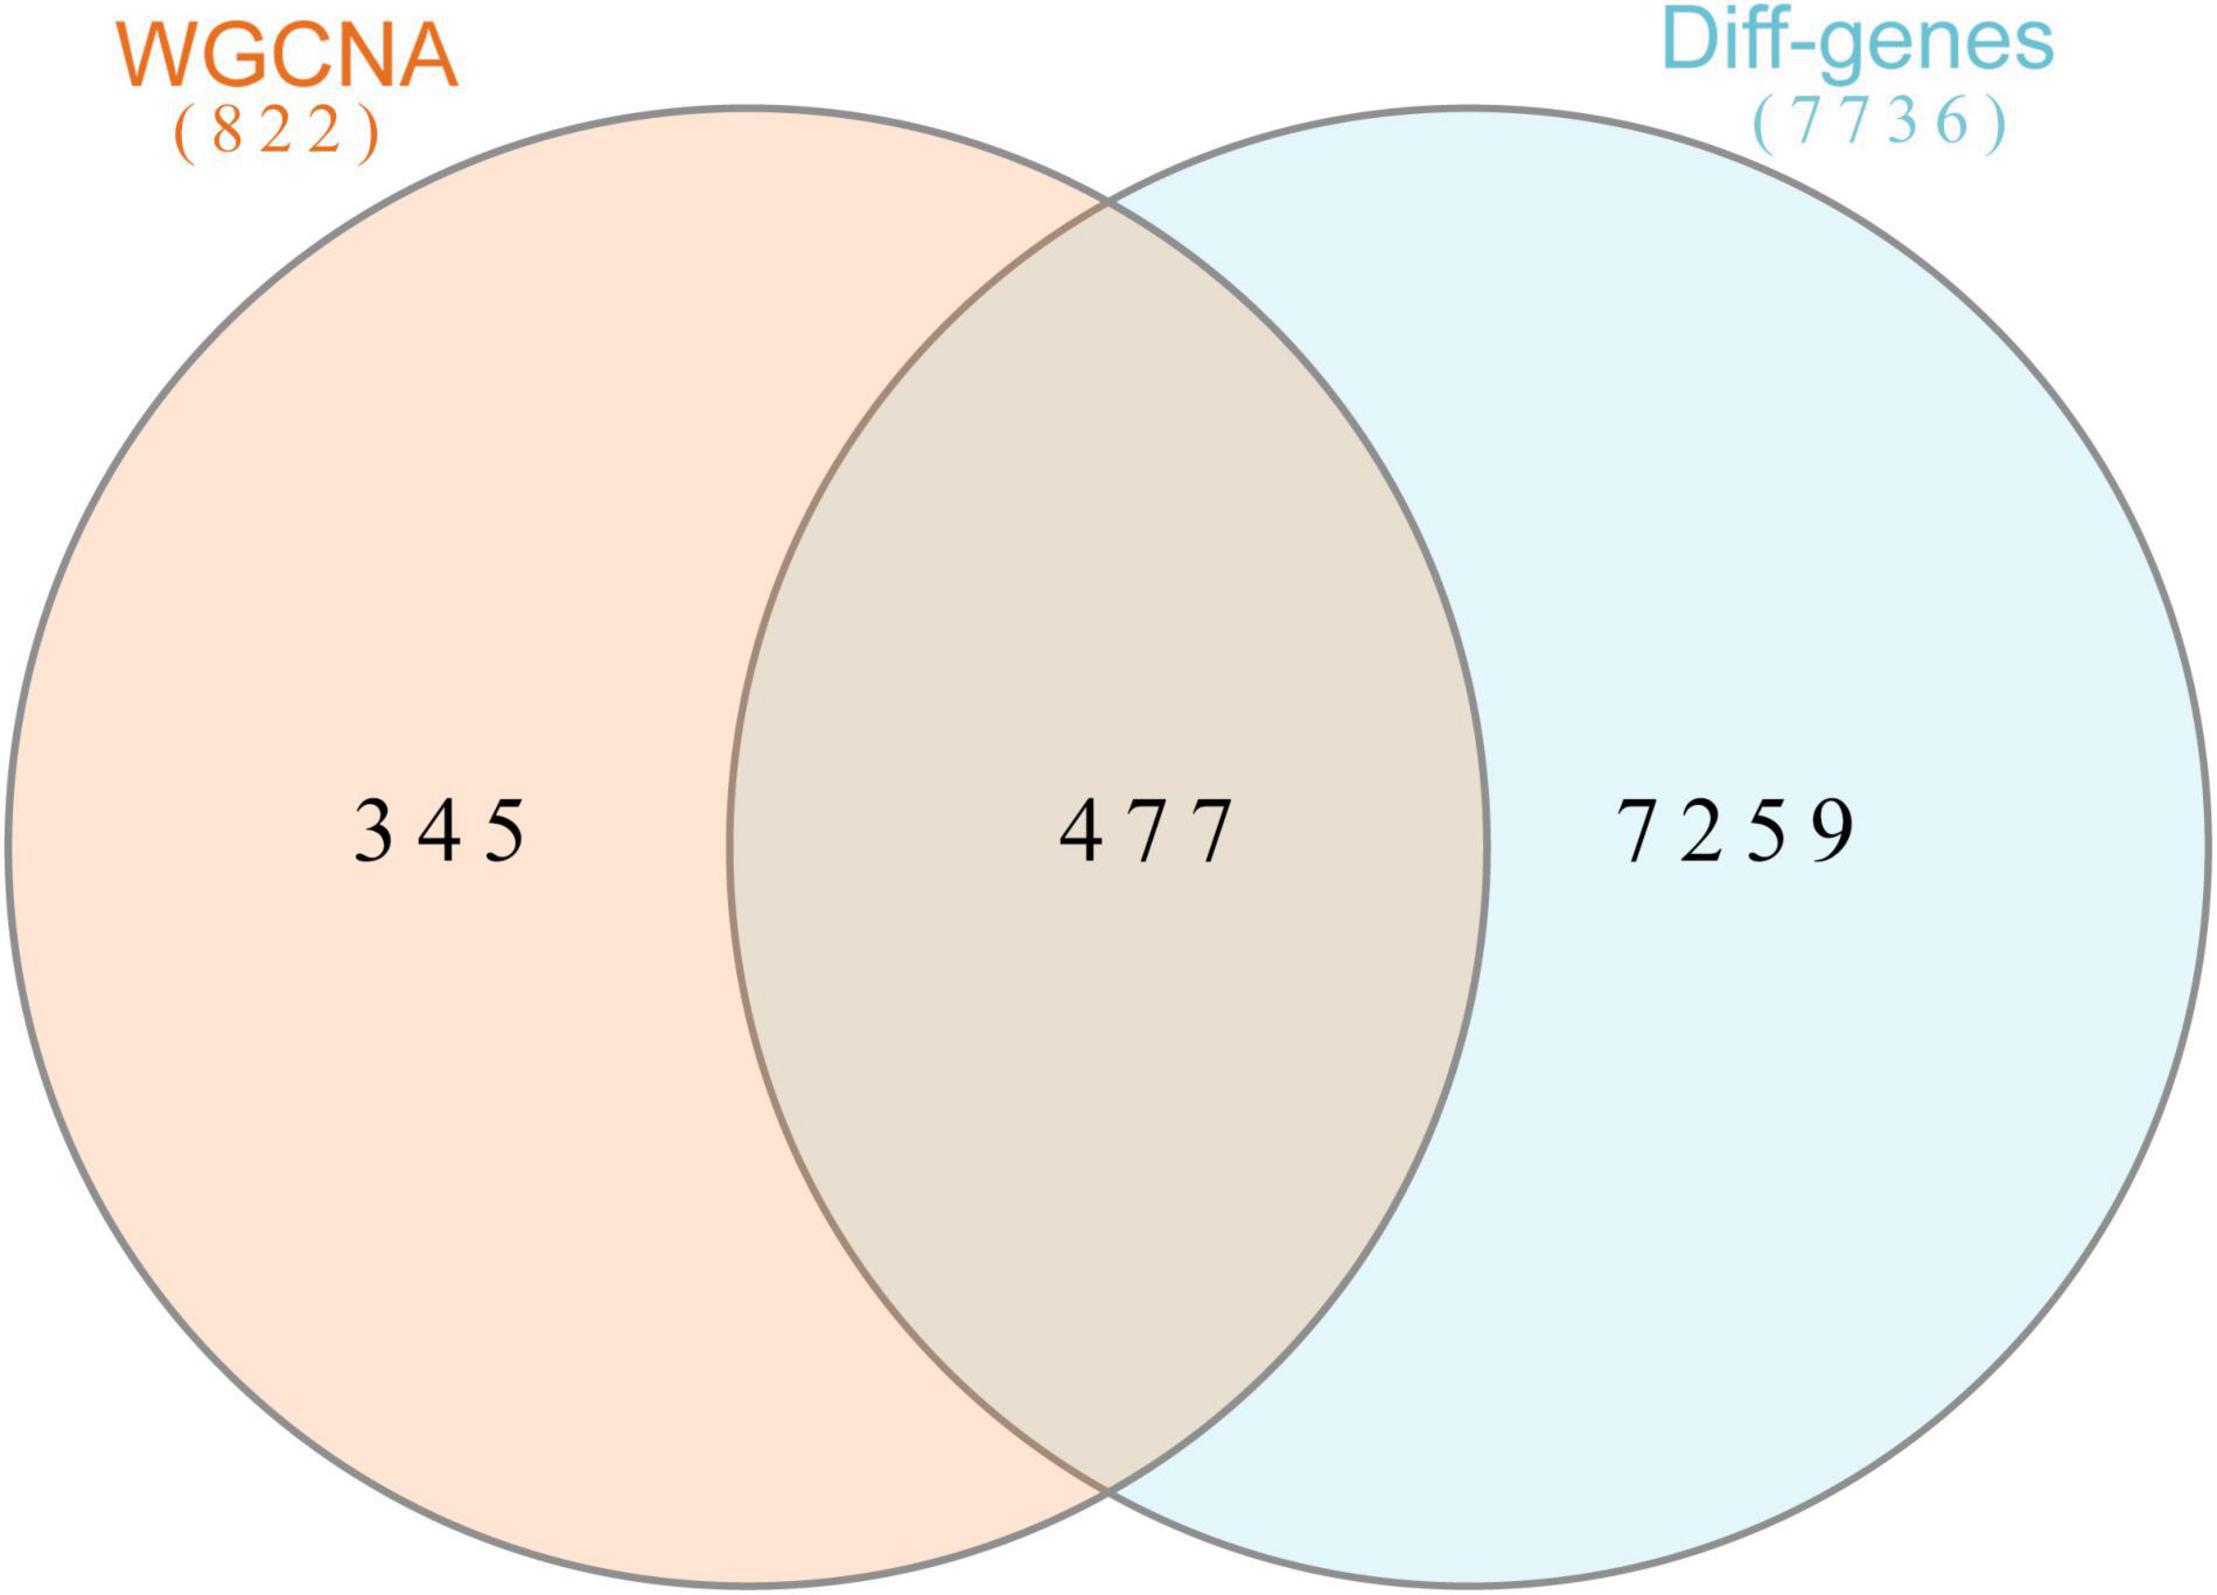 Frontiers | Identification of Differential Genes of DNA Methylation ...